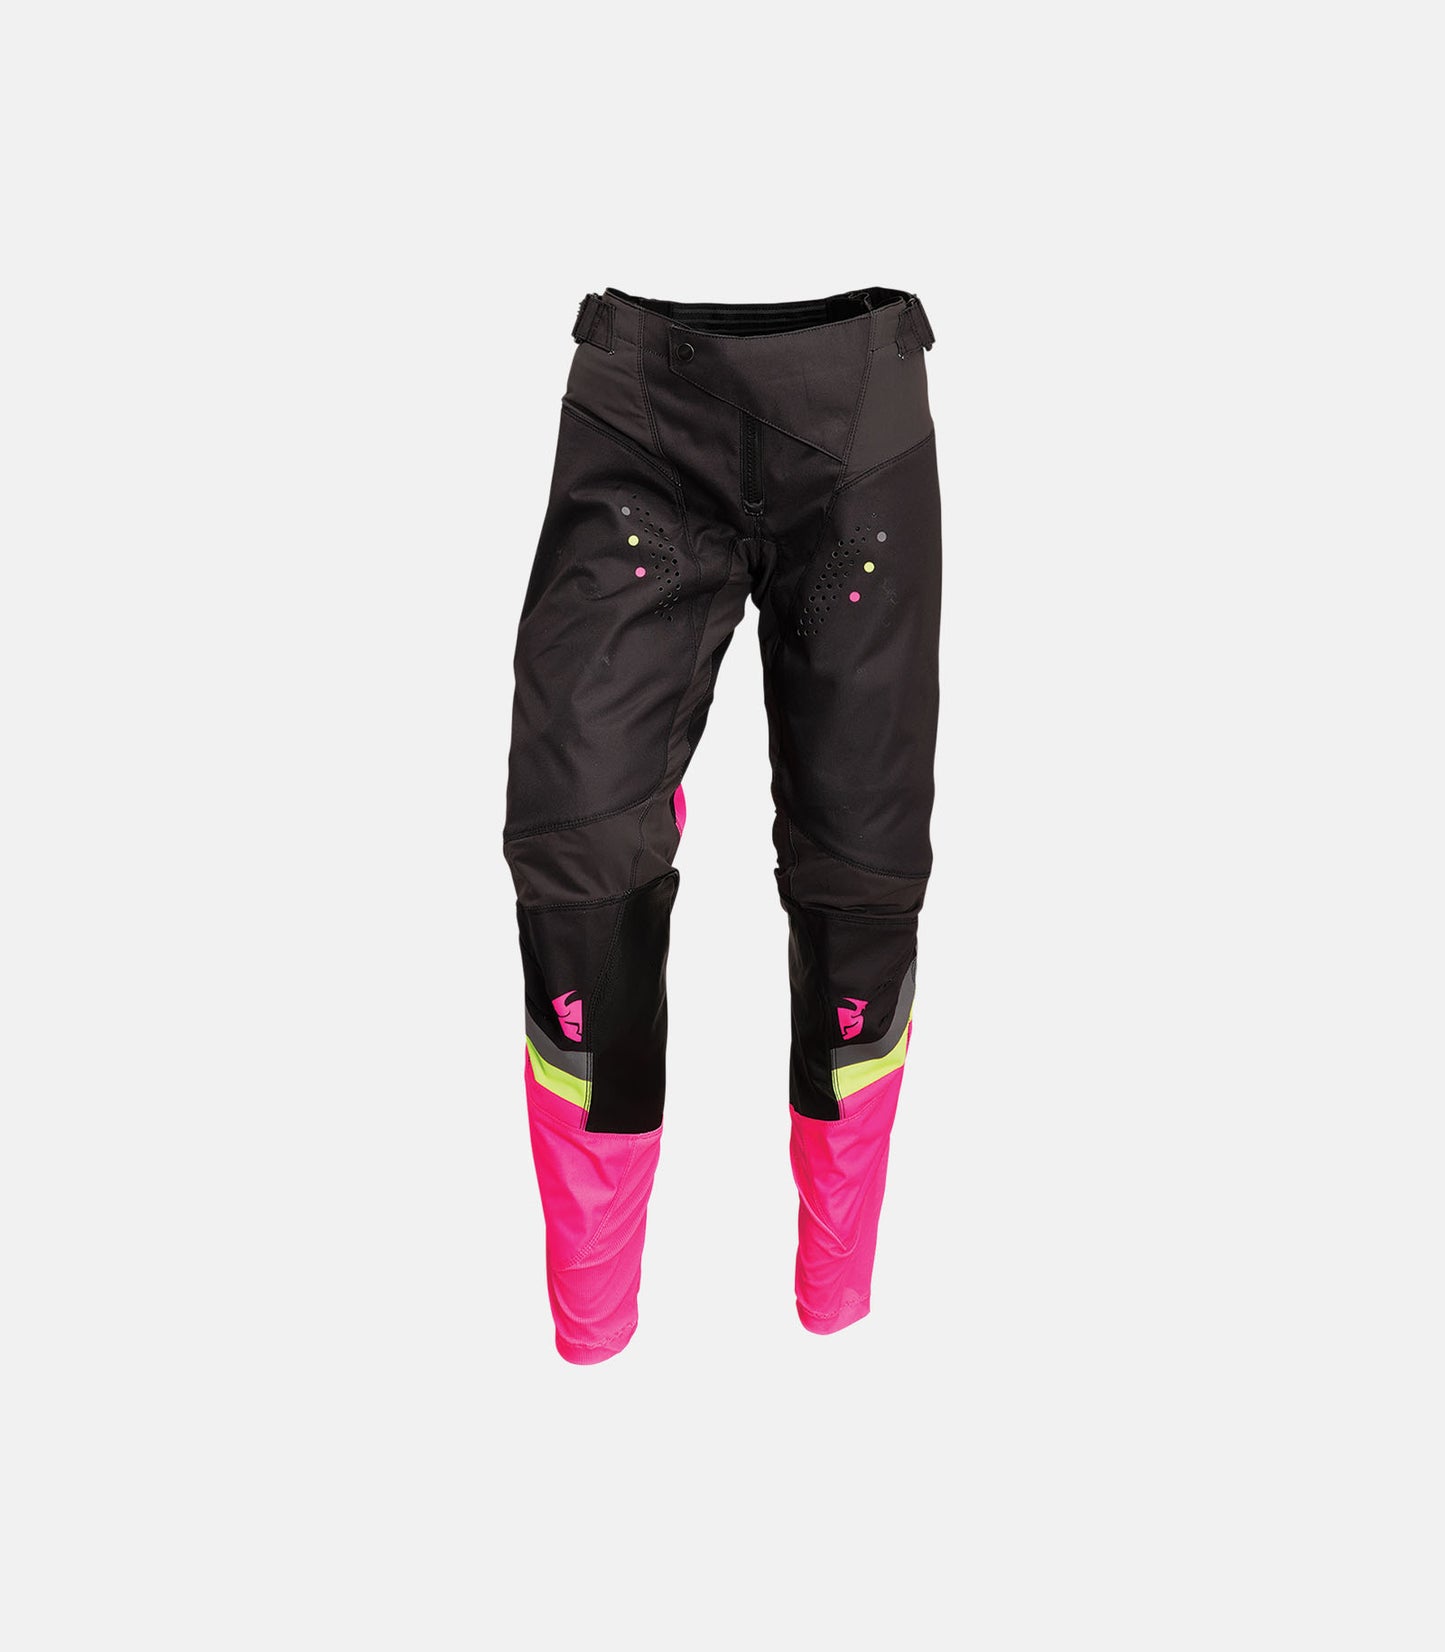 THOR Women's Pulse Rev Pants - Charcoal/Pink